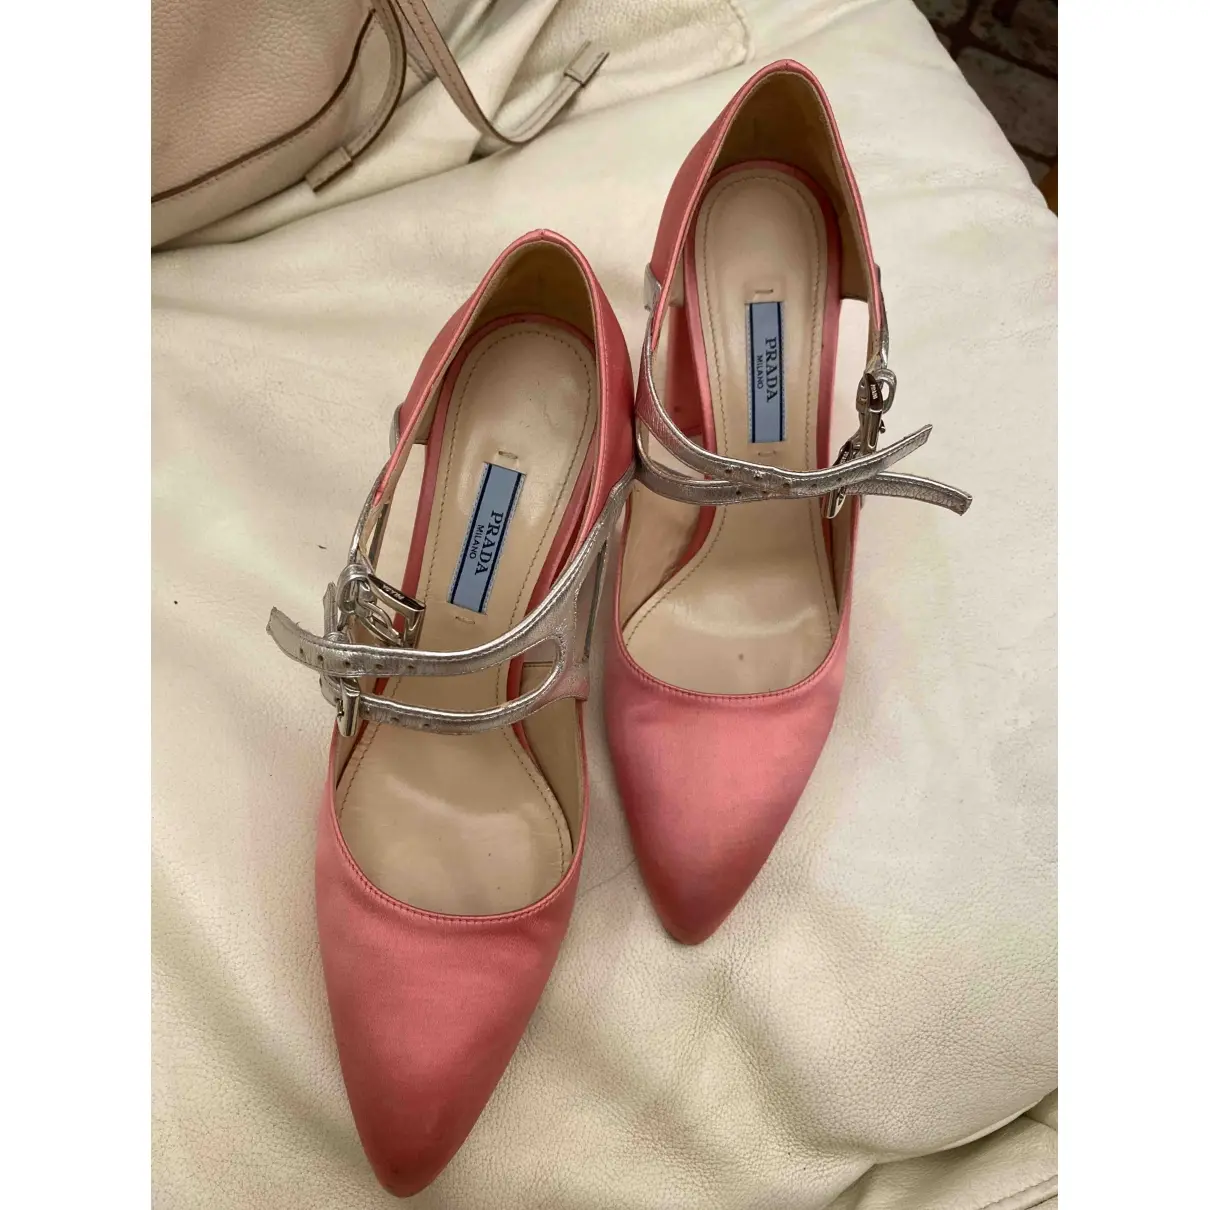 Prada Mary Jane cloth heels for sale